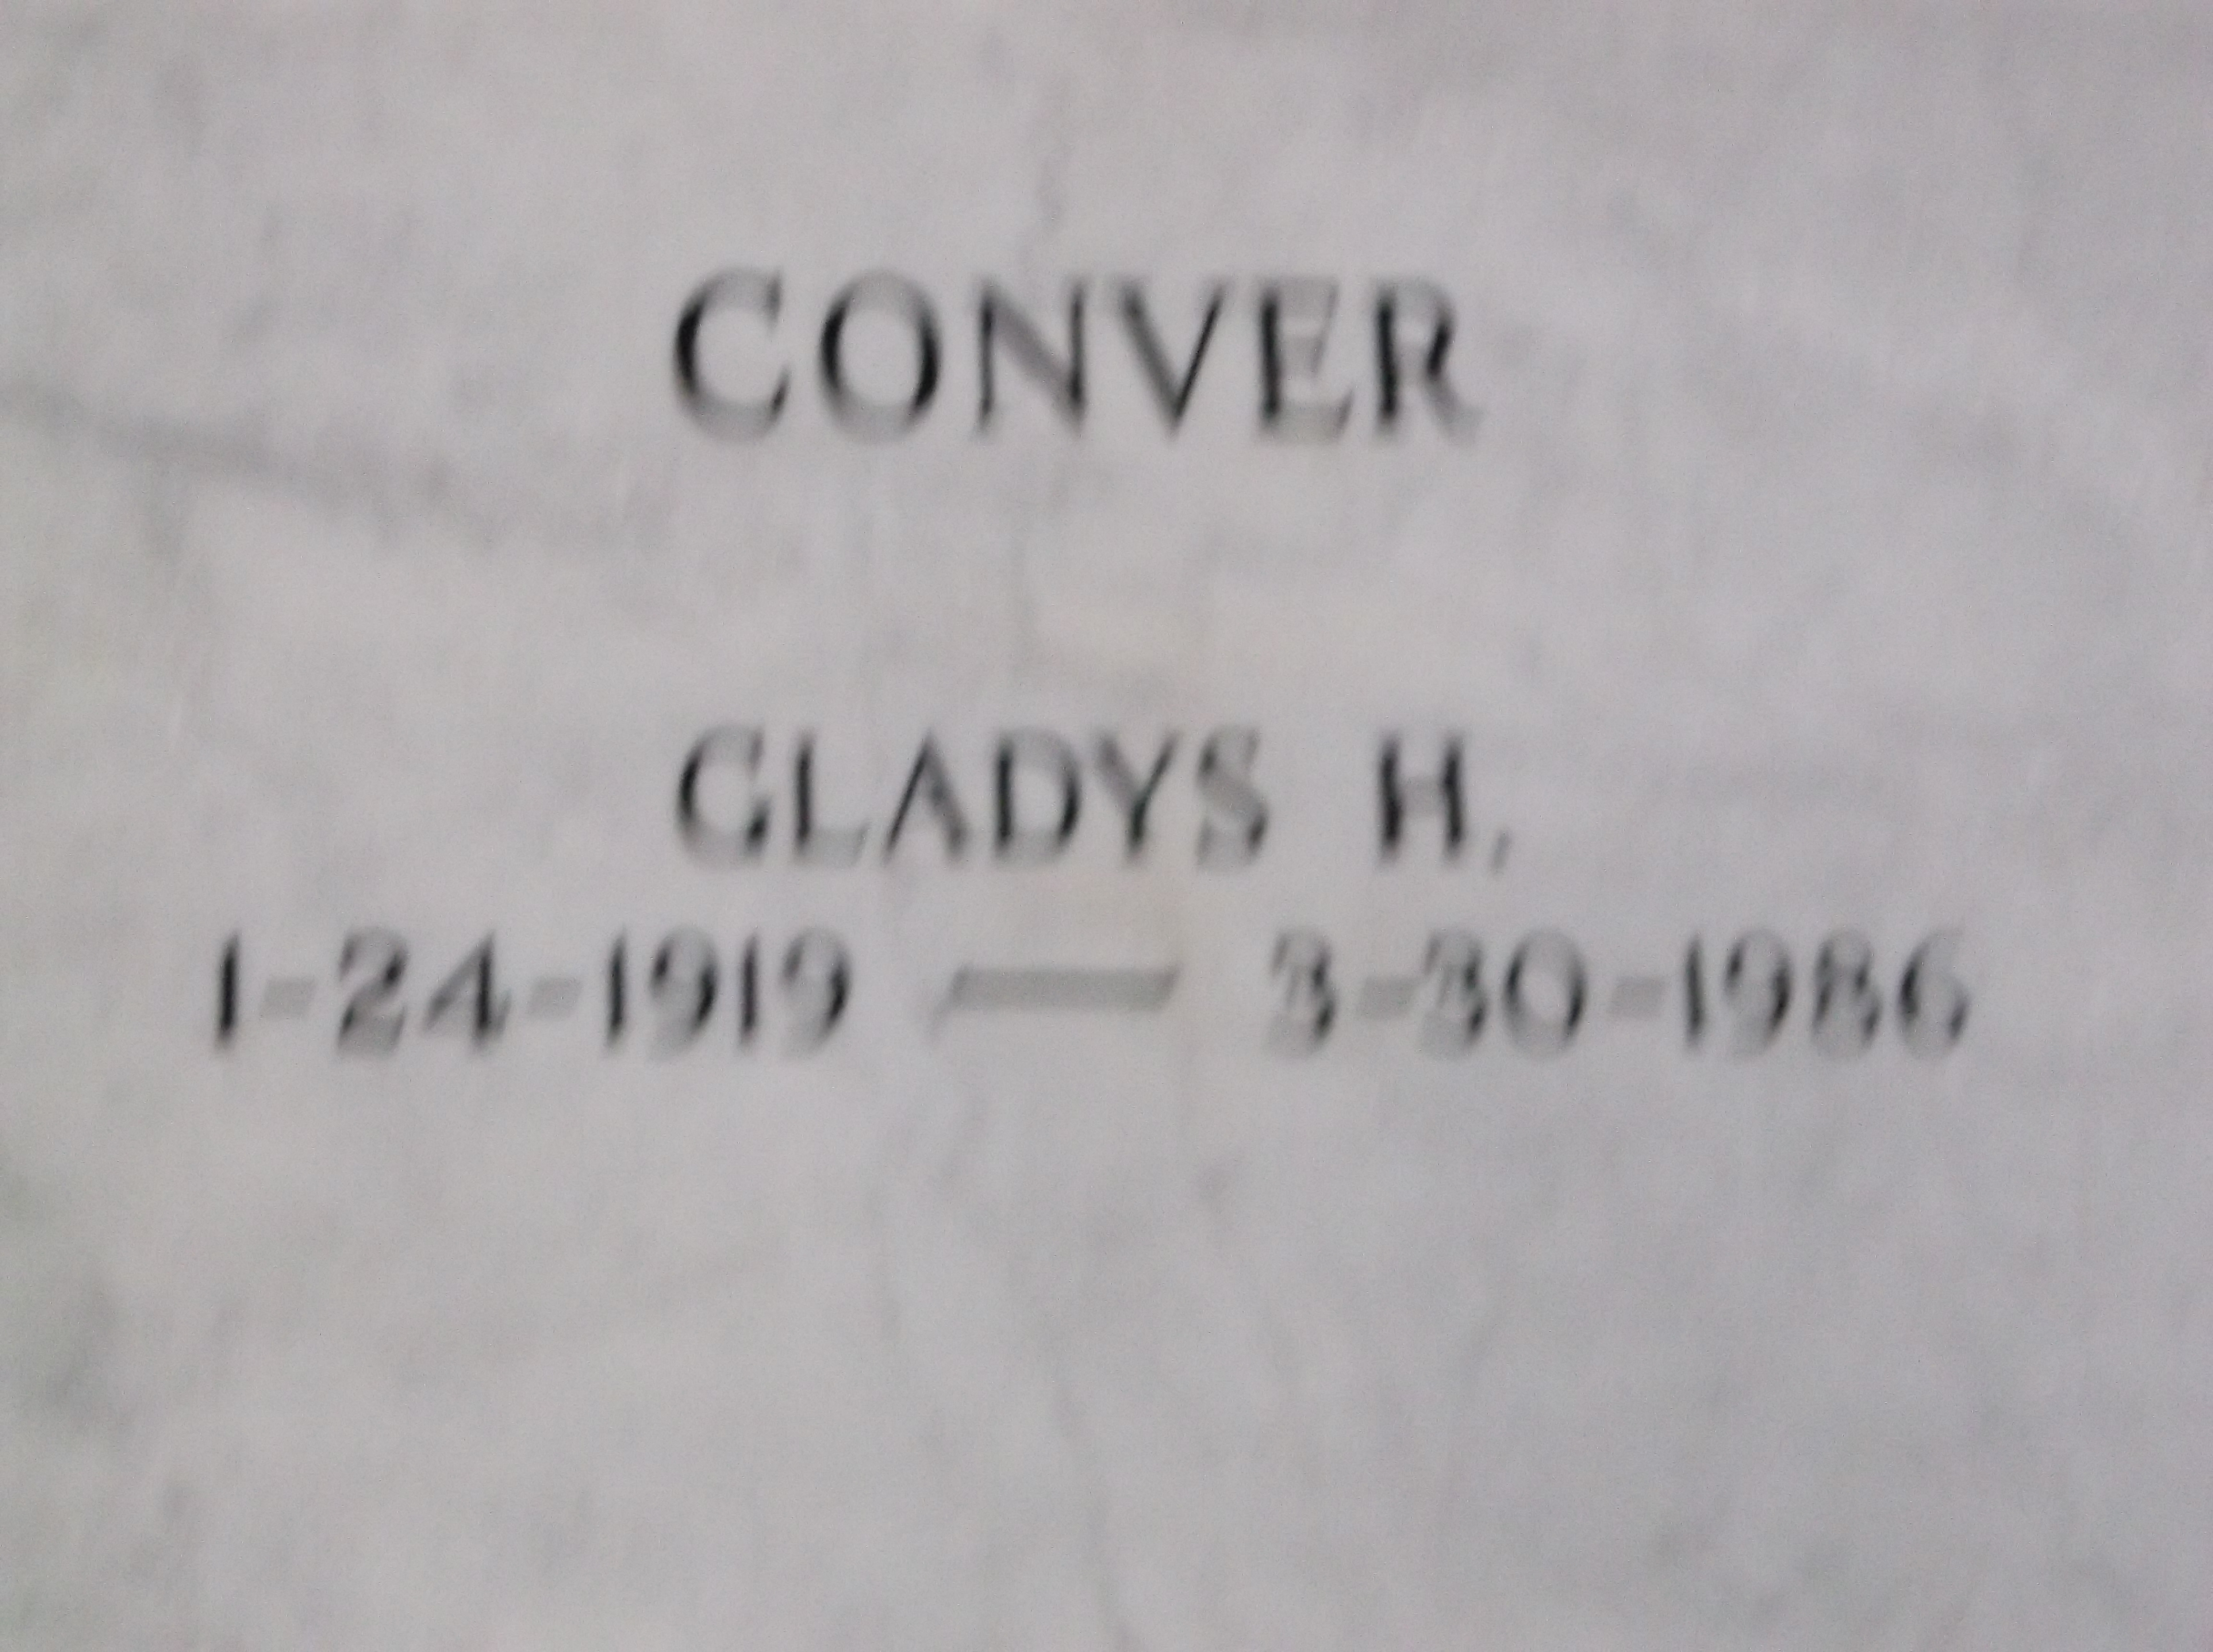 Gladys H Conver